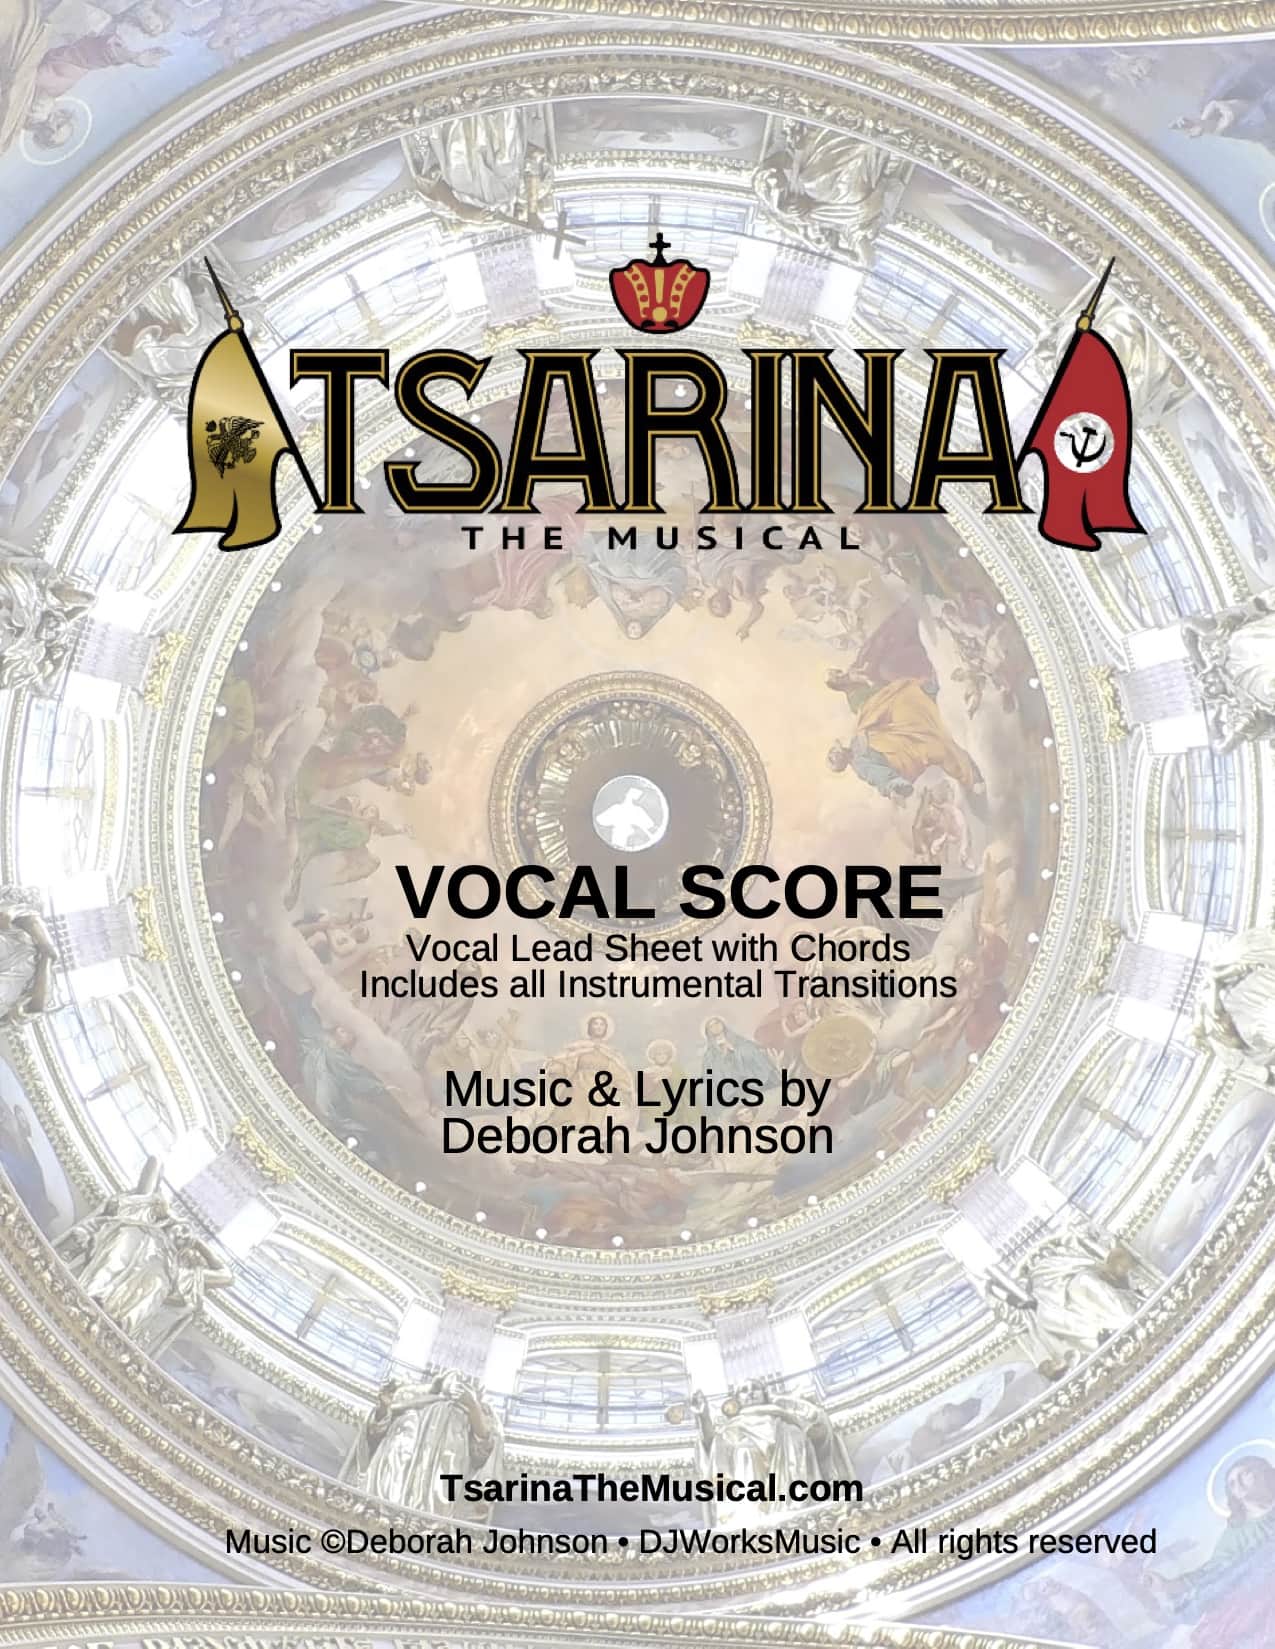 Tsarina the Musical Vocal score cover